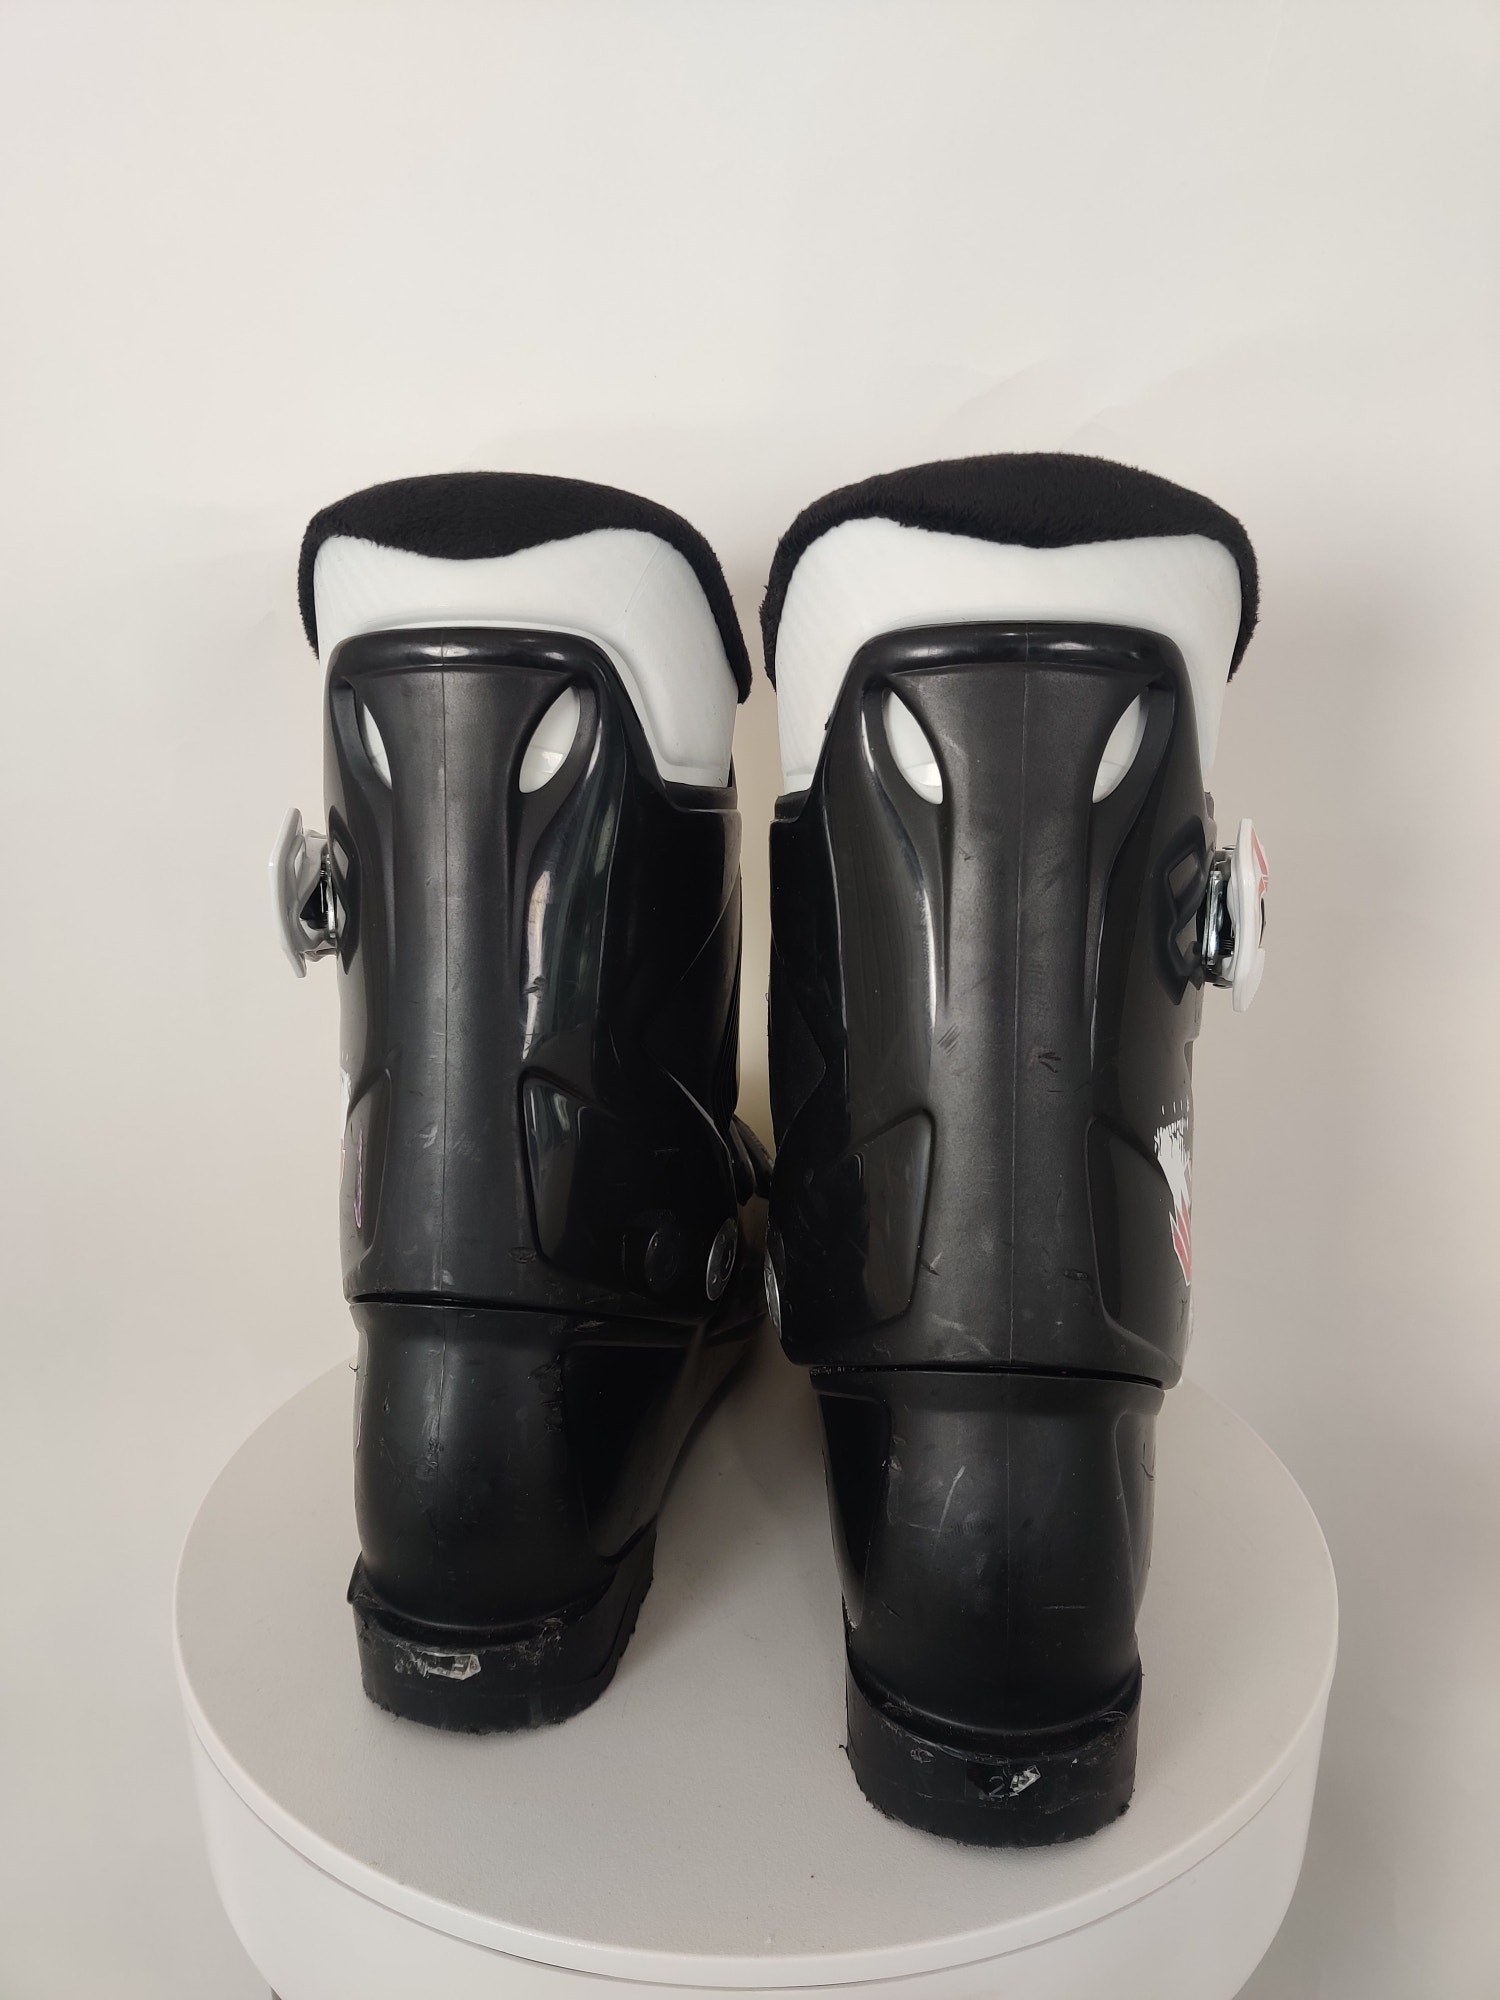 Tecnica JT 3 Jr 25.5-26.5 Mondo Kids Snow Ski Boots 305 mm black/white - Picture 10 of 11